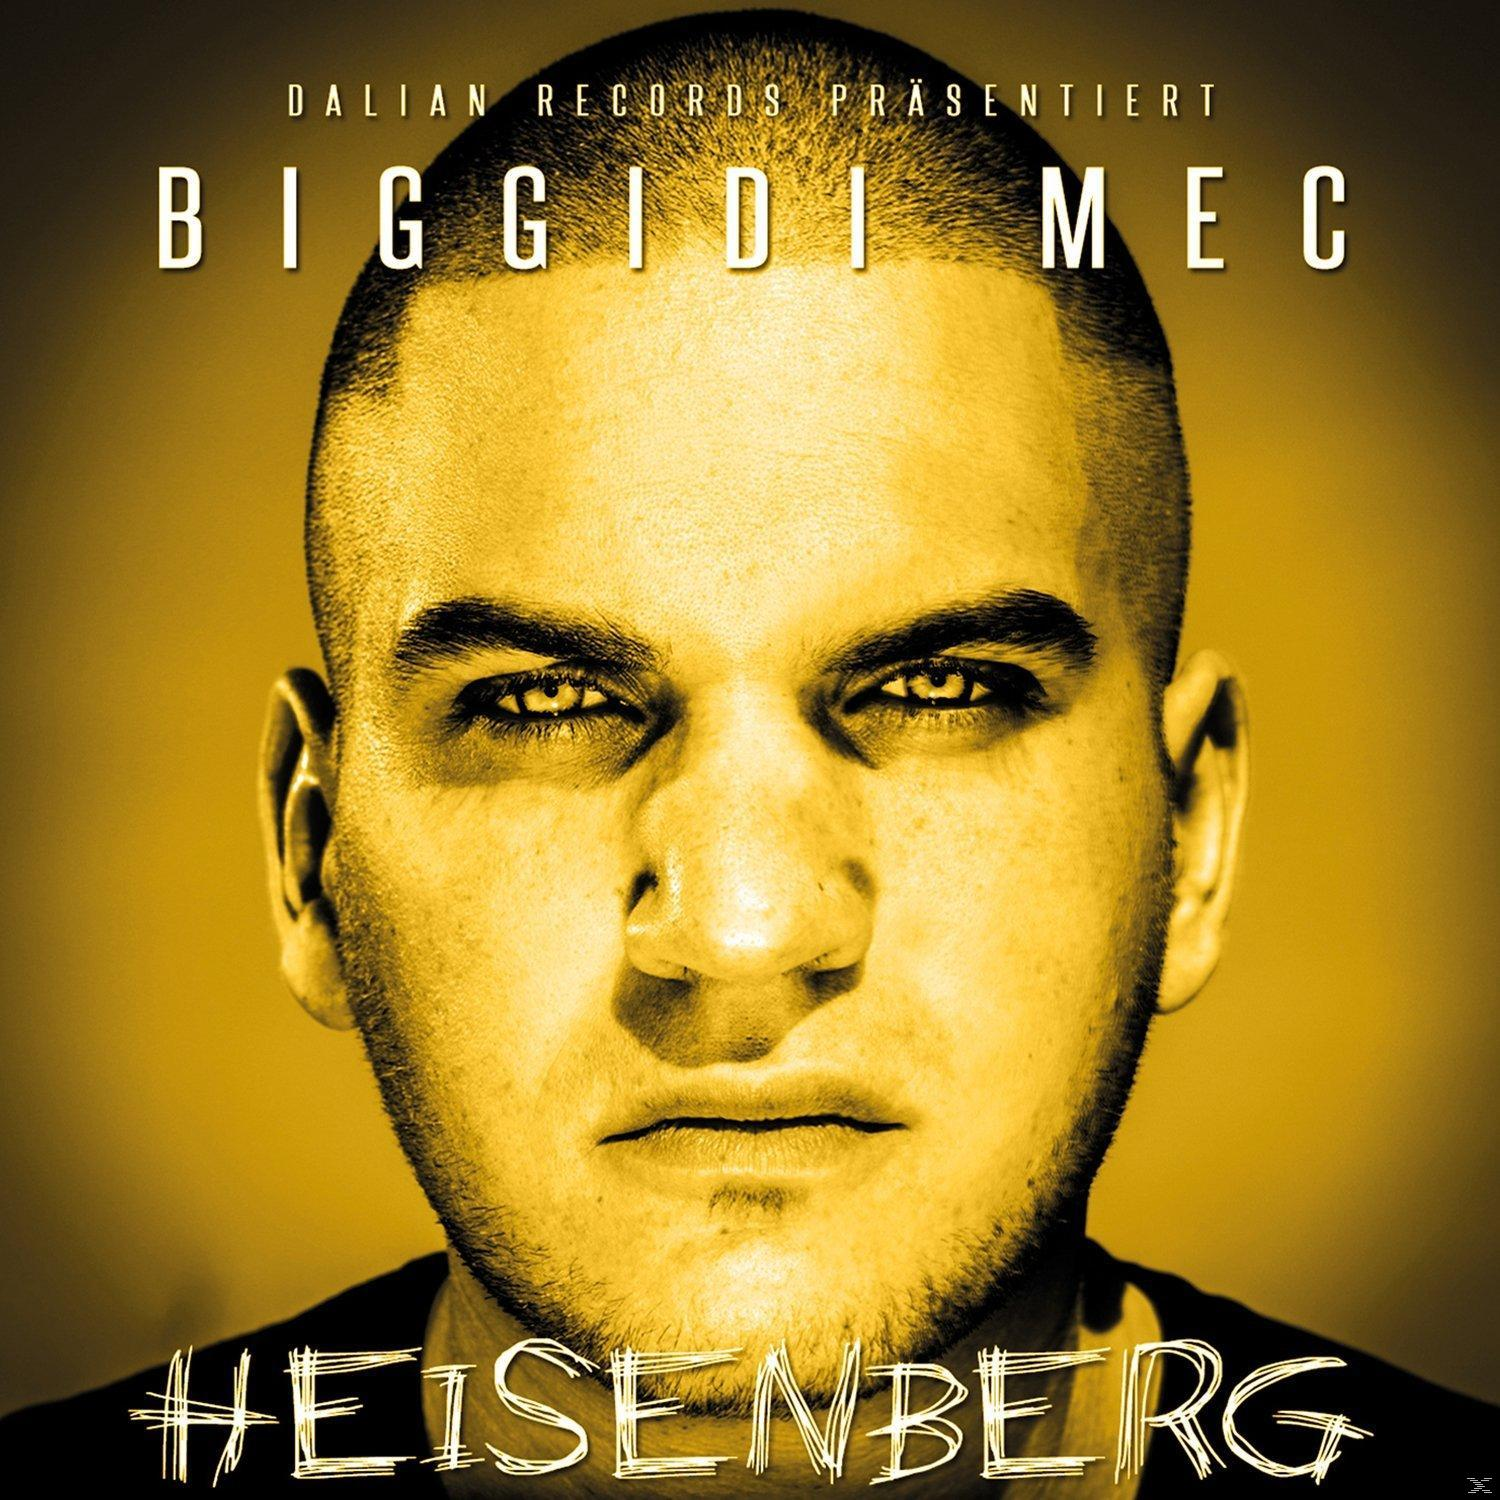 Biggidi Mec - - (CD) Heisenberg